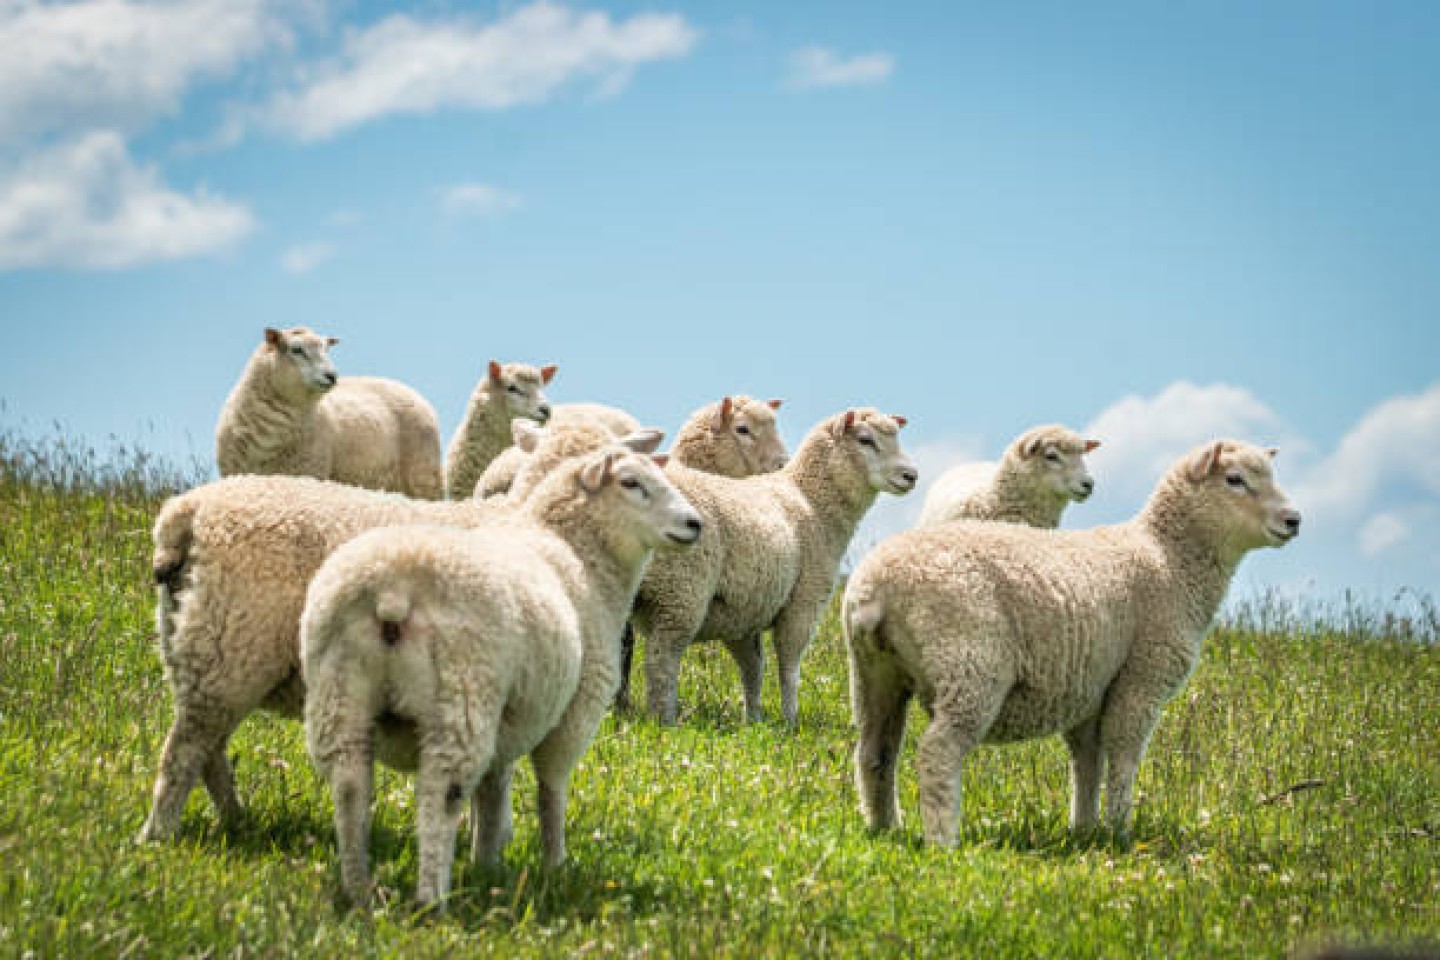 Curious sheep in Dunedin, Otago Harbour, South Island NZ